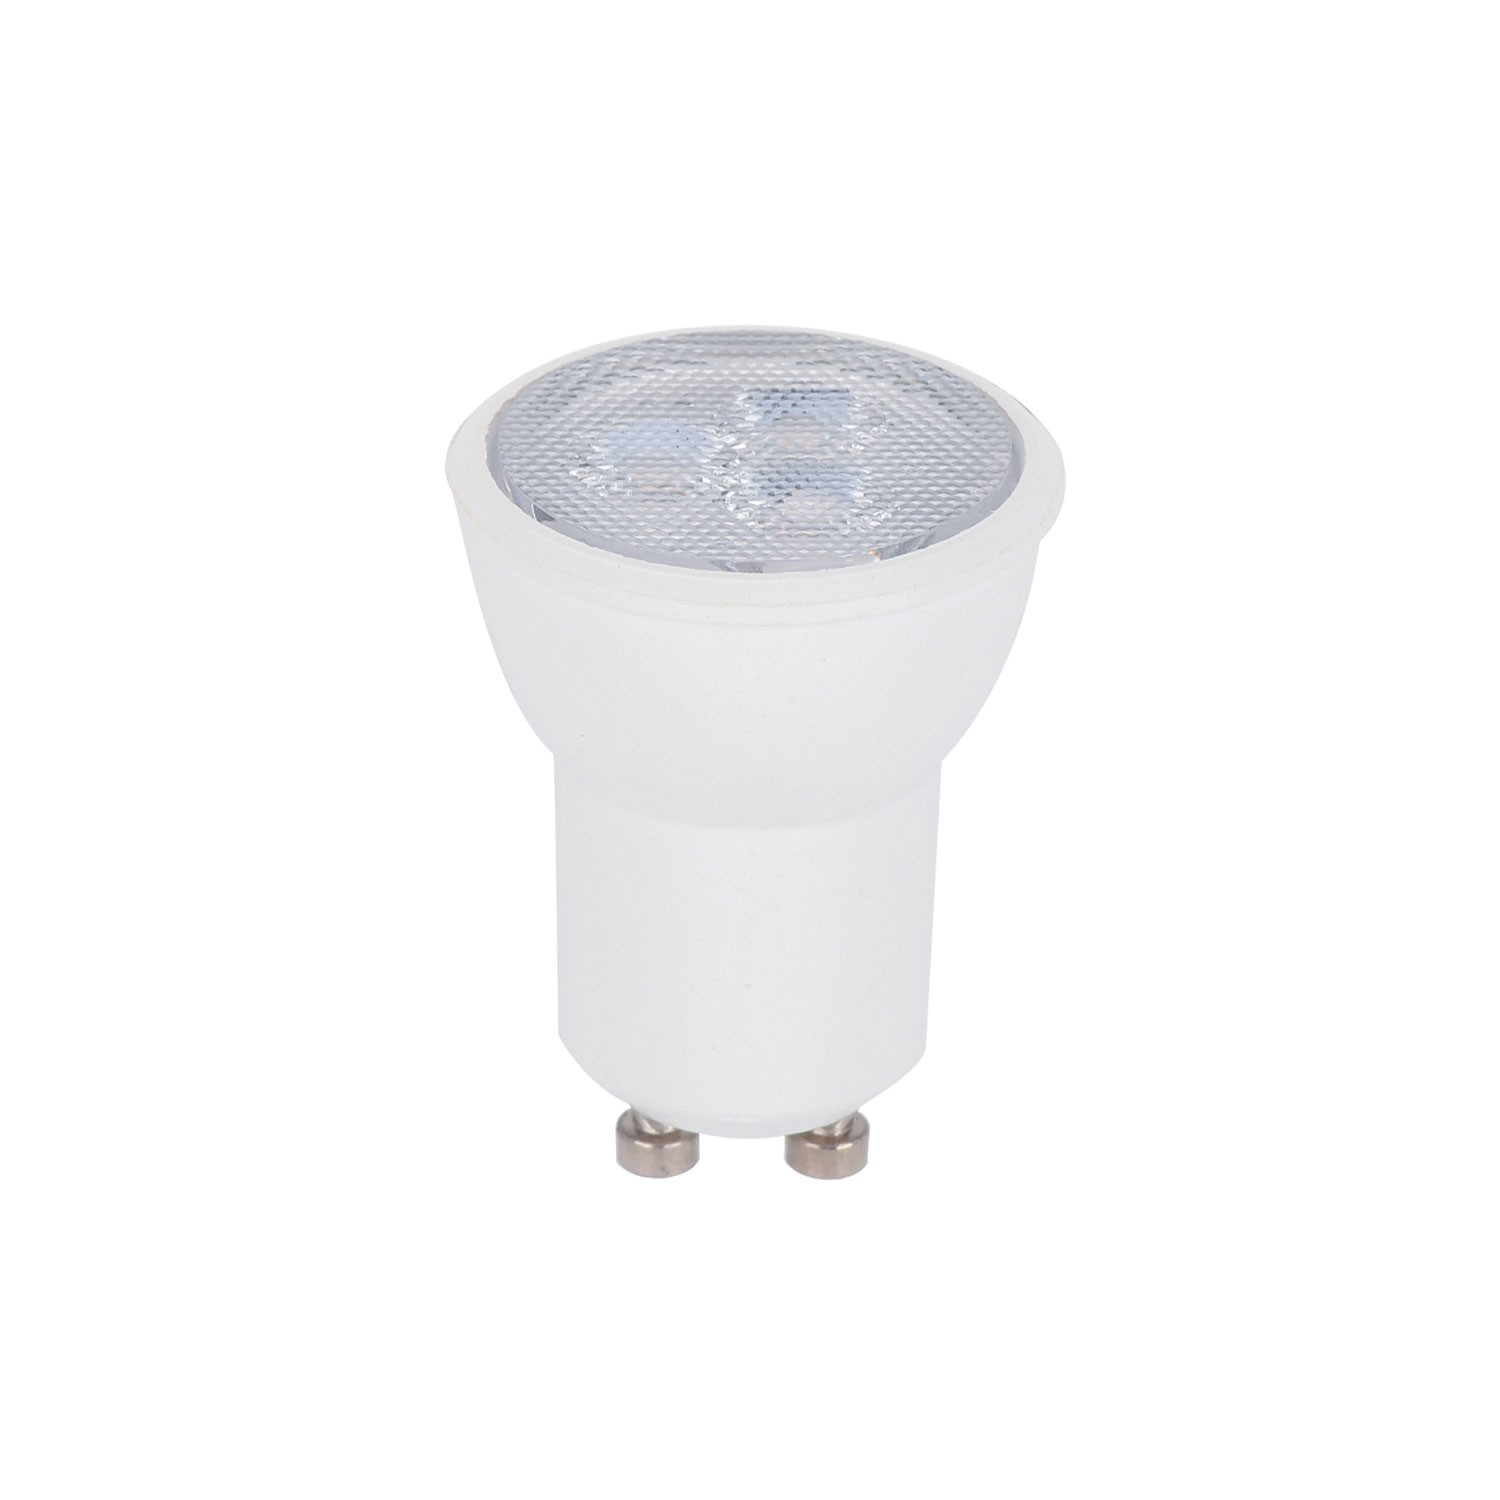 GU1d-one Pastel Lámpara articulada sin base con mini foco LED y enchufe de 2 polos